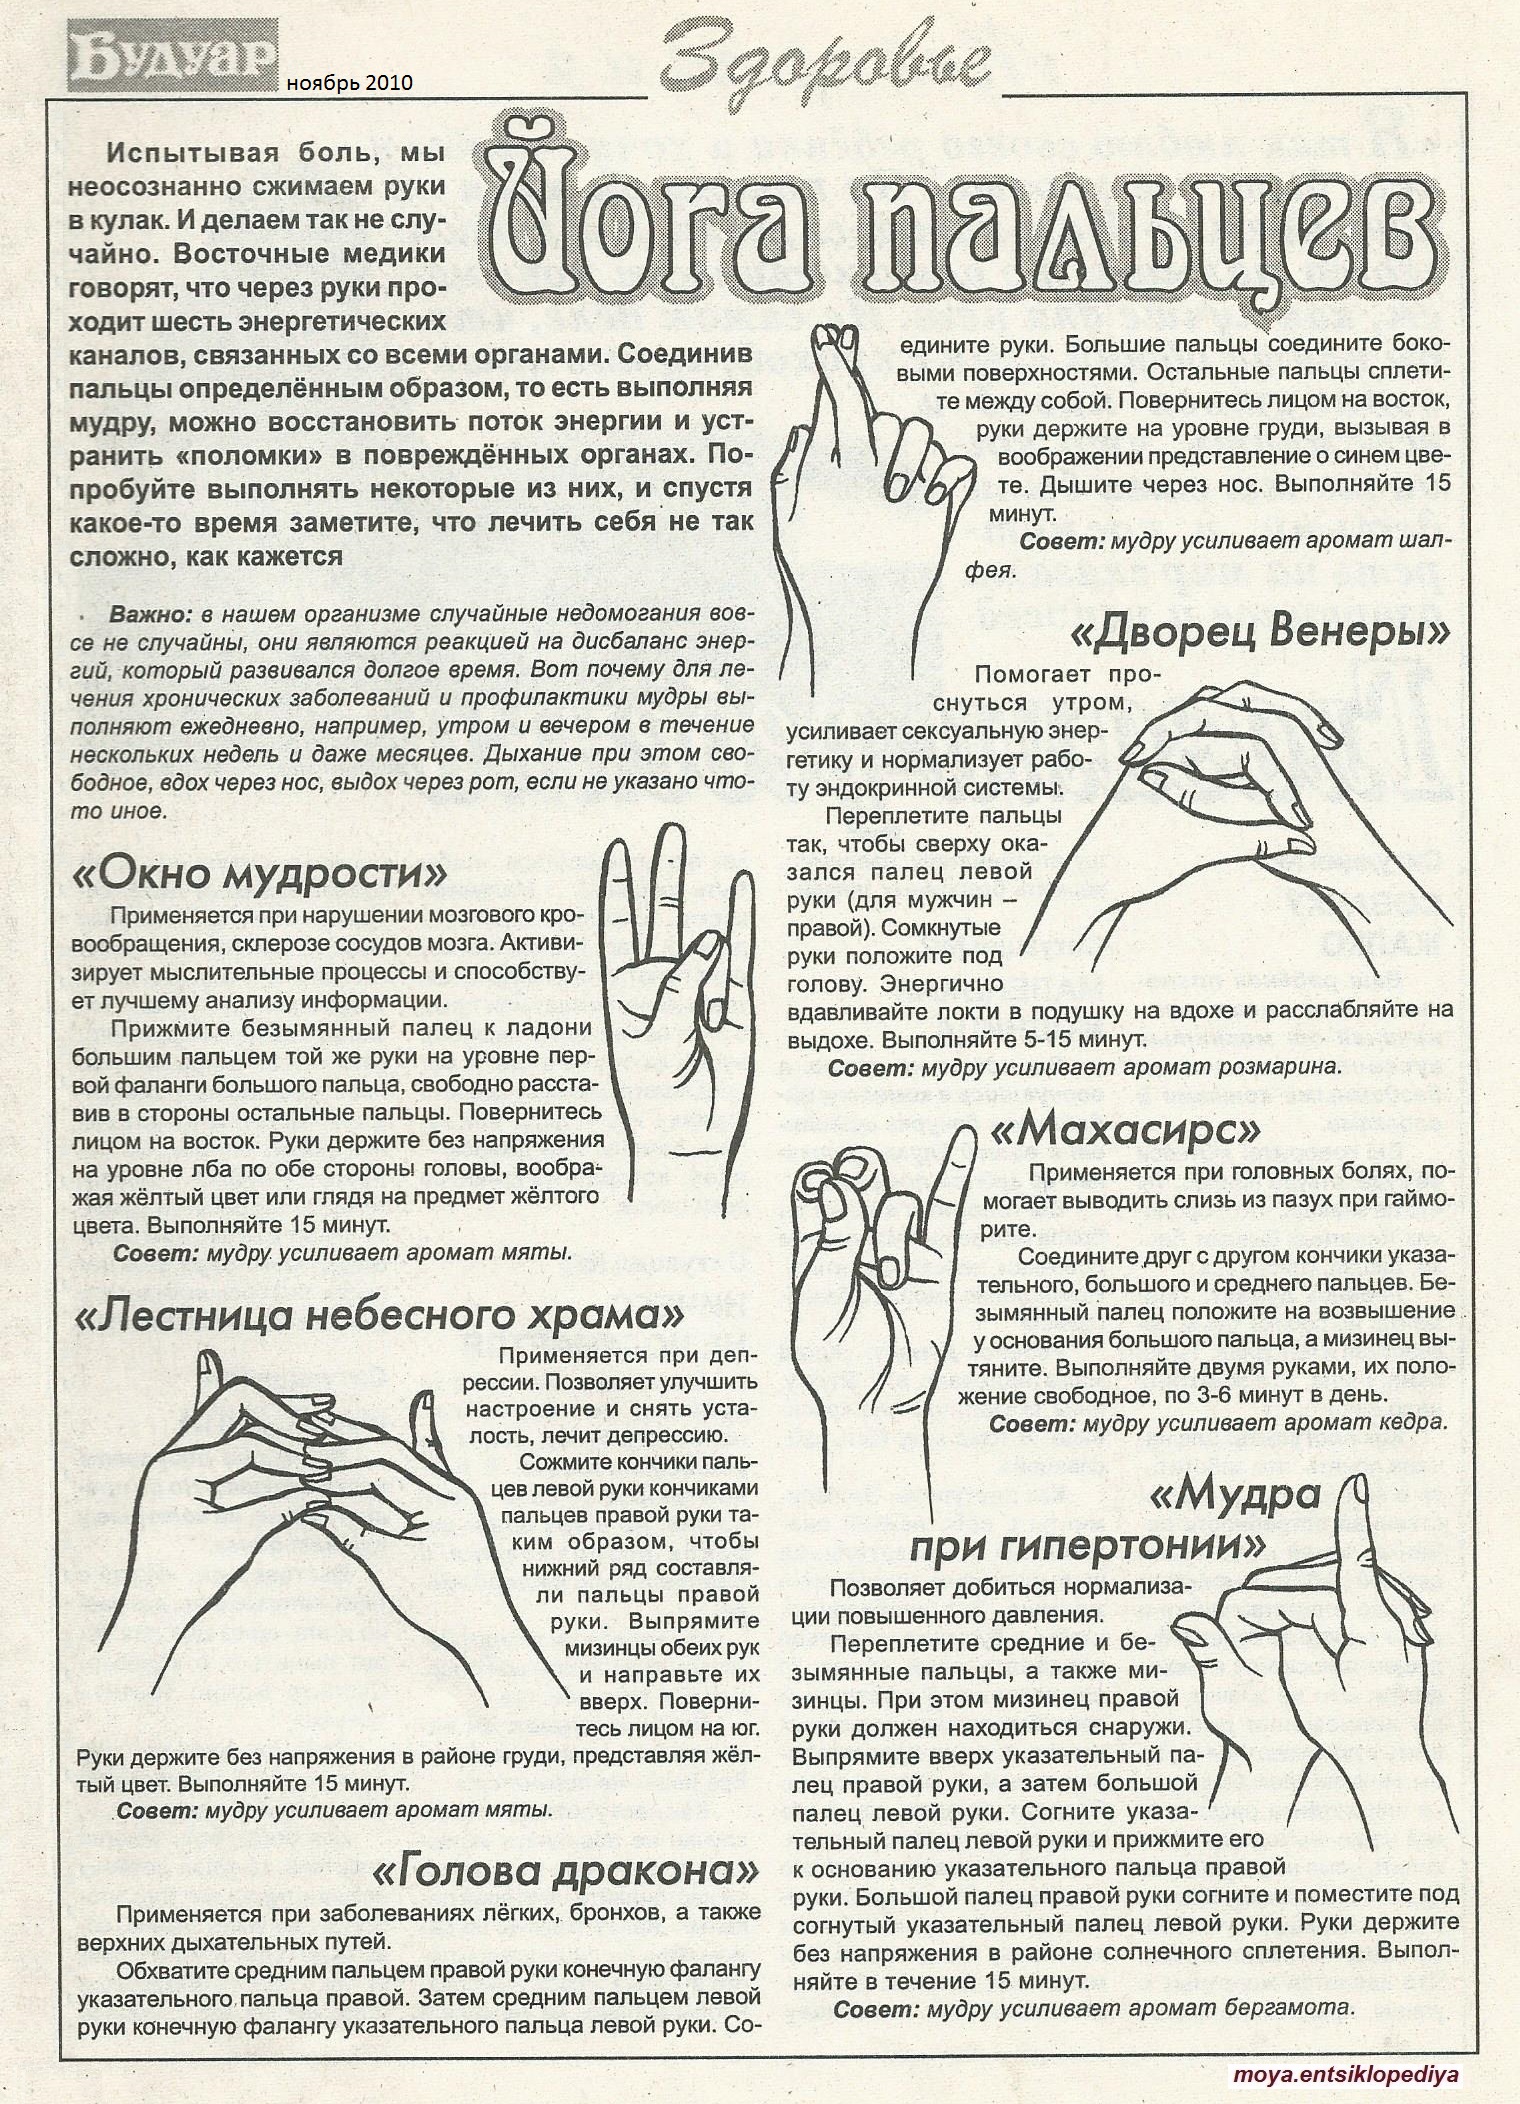 Мудра украина. Анимают пальцы на левой руке. Немеет мизинец на левой руке. Указательный палец правой руки. Онемение мизинца на руке на левой руке.